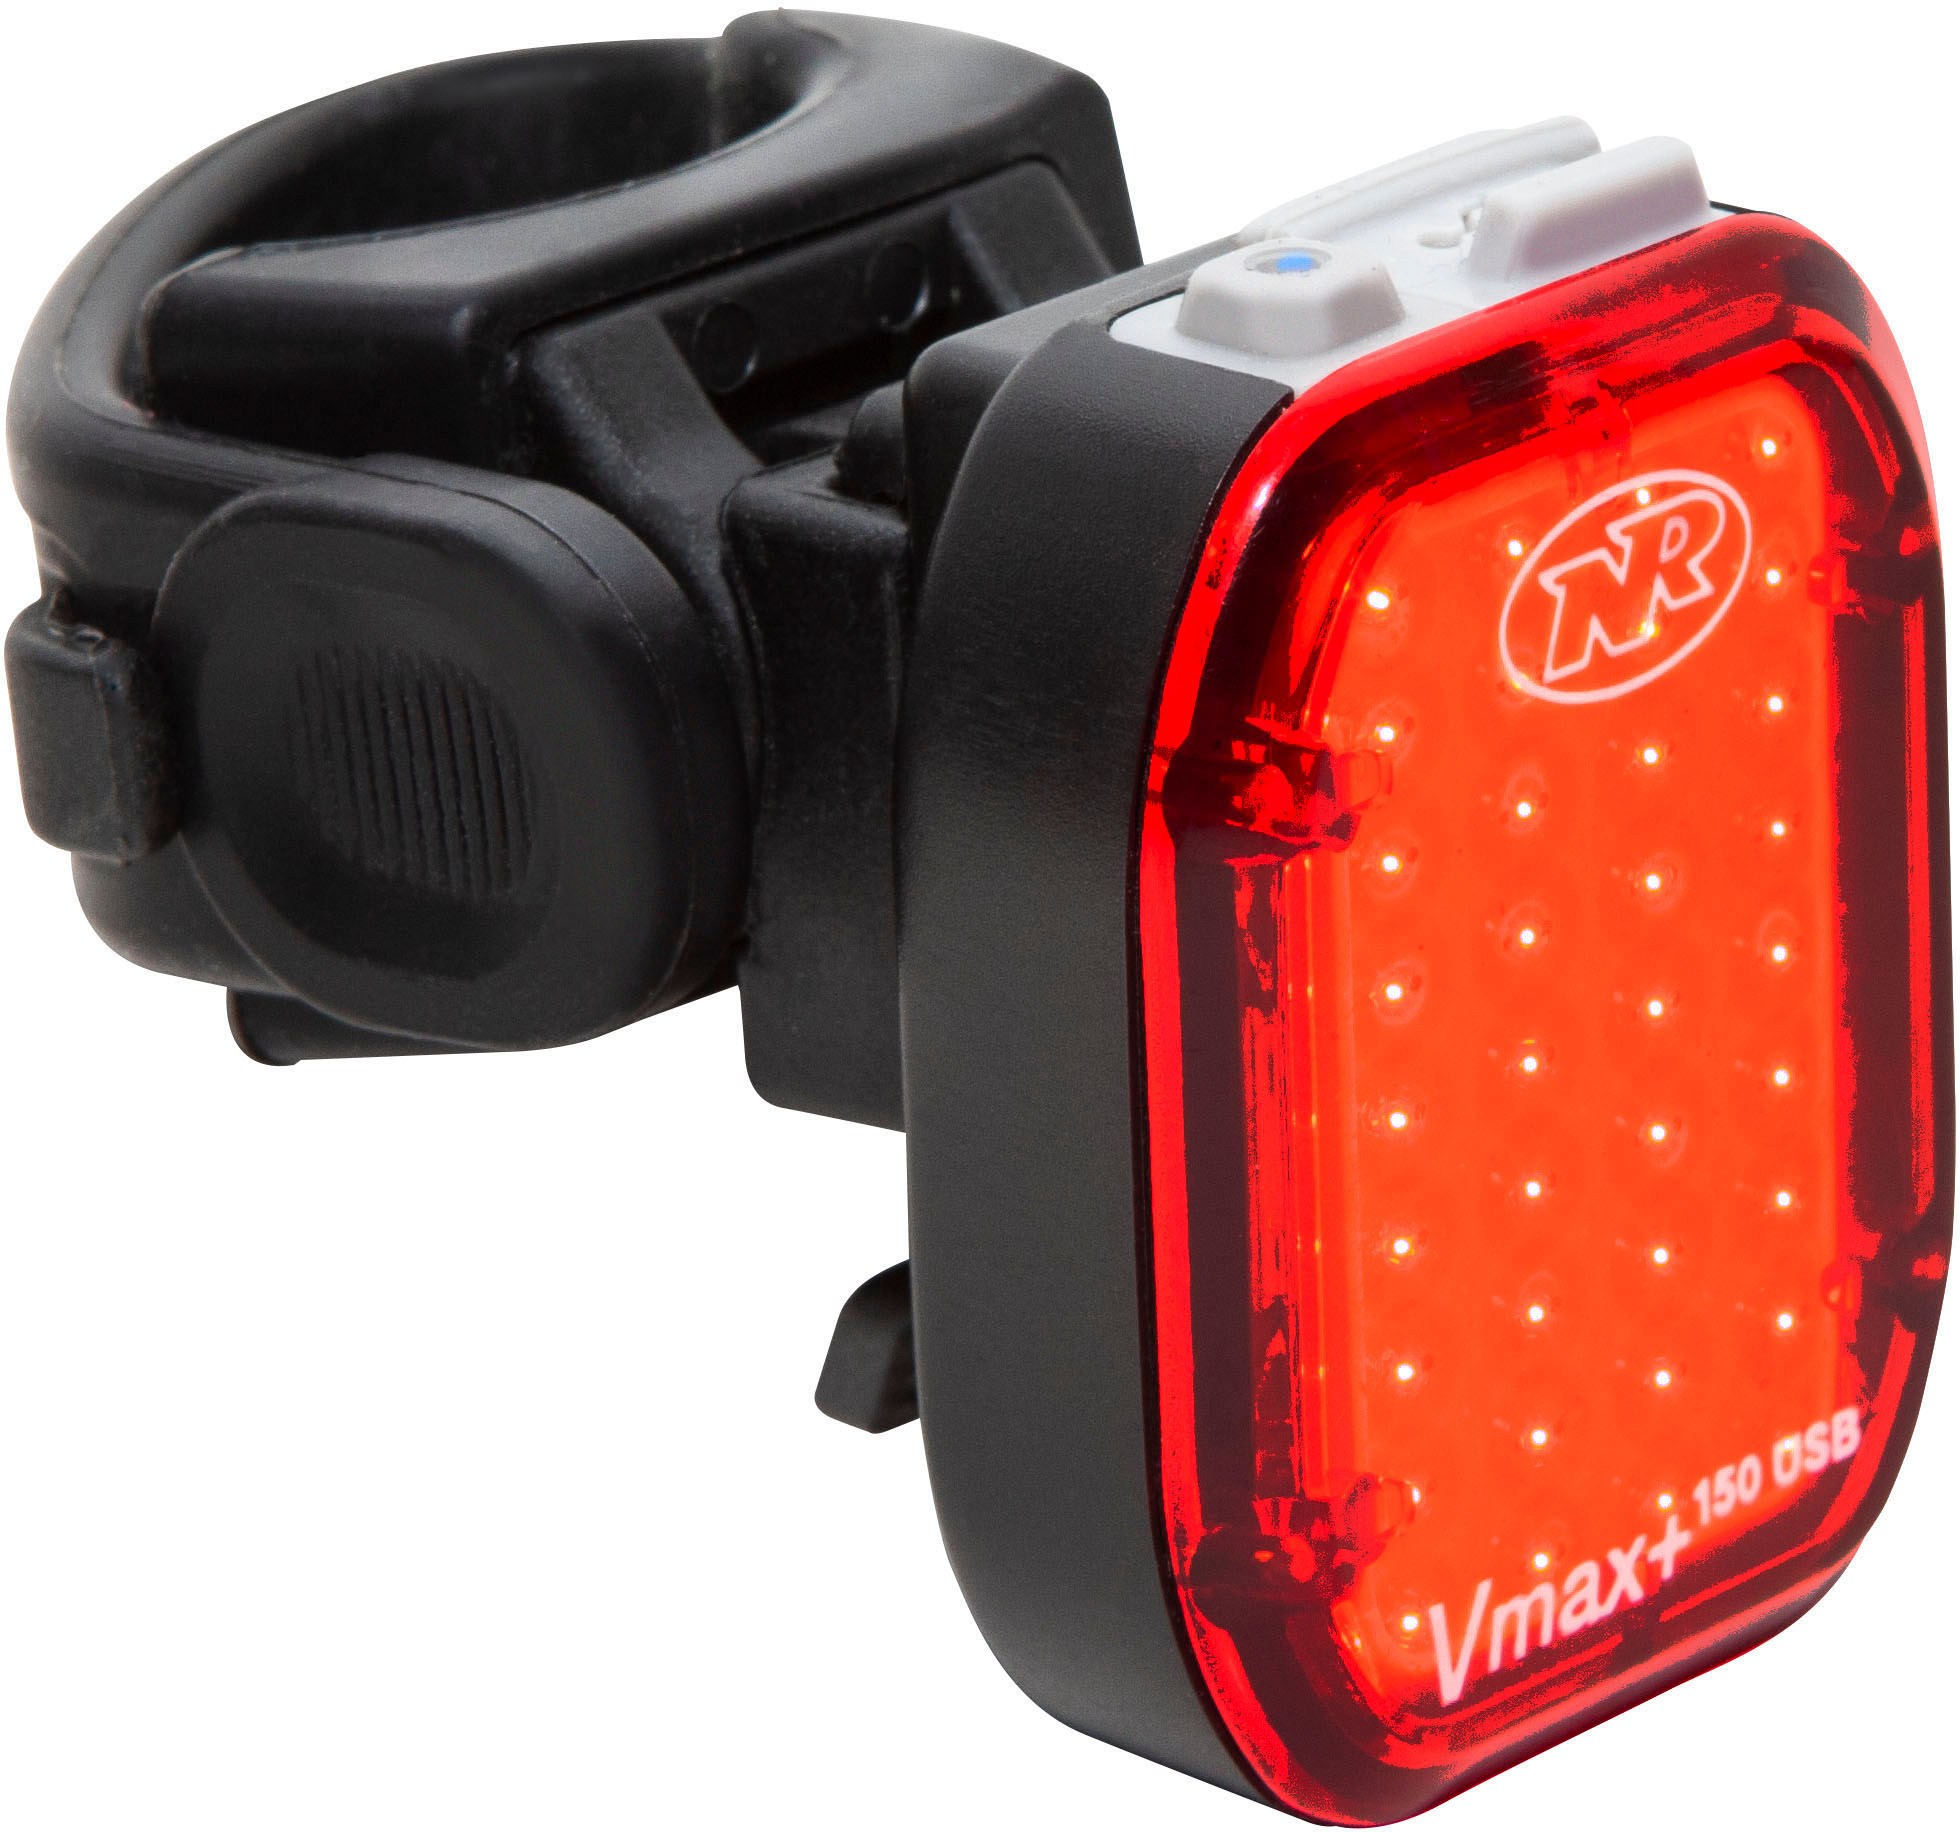 Задний фонарь для велосипеда Vmax+ 150 NiteRider, красный задний фонарь в сборе 35710 03g30 задний тормозной фонарь для kawasaki atv kfx400 ksf400 kfx ksf suzuki lt f250 ltf ltz lta ltf ltz 400